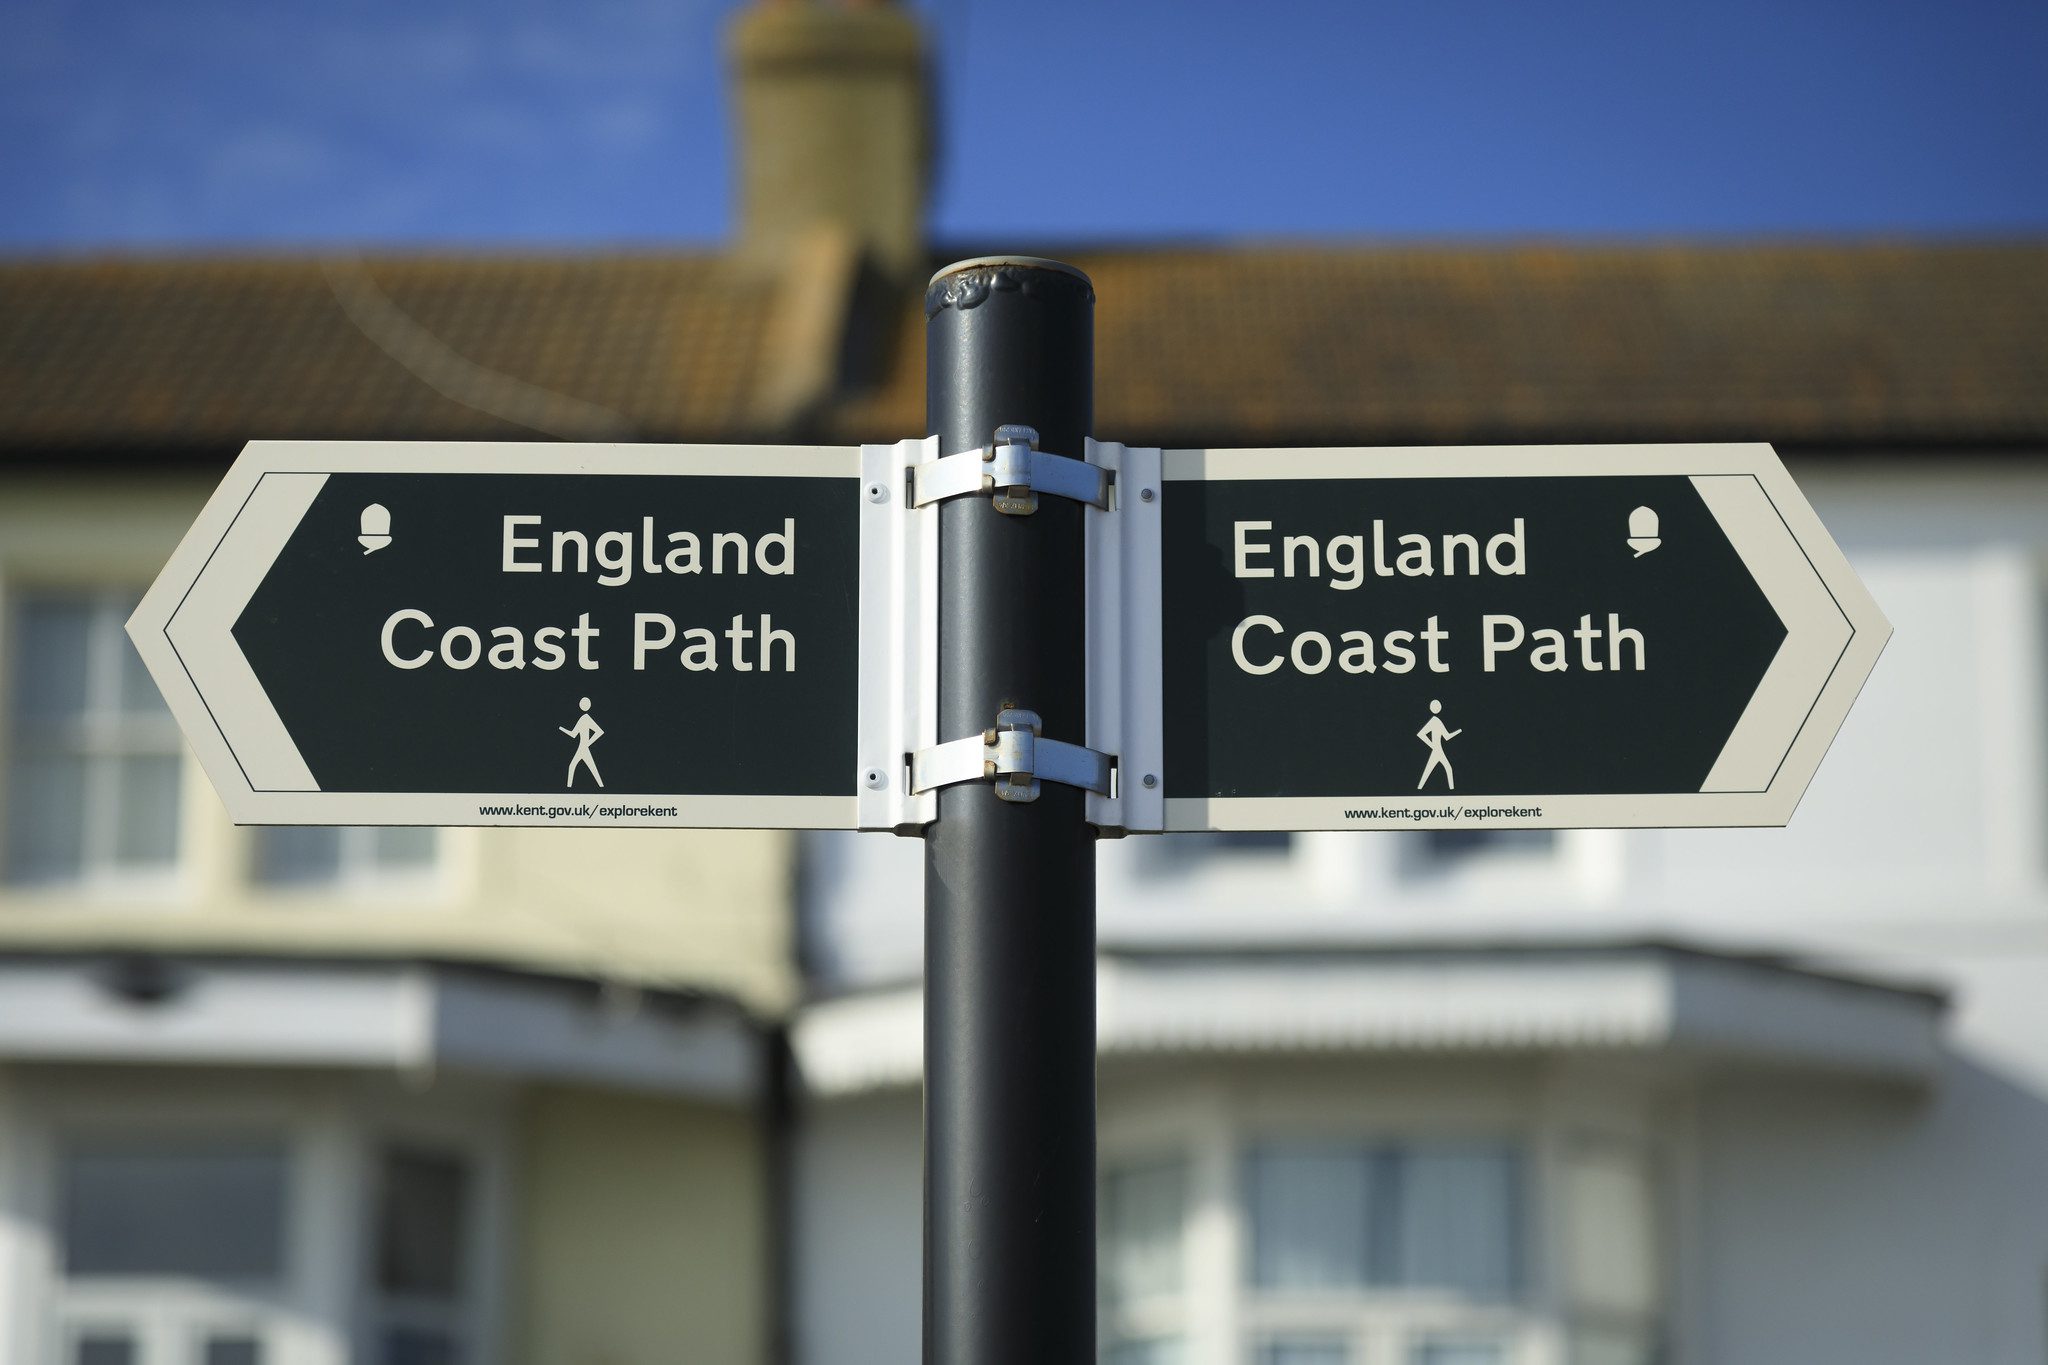 England Coast Path signs in Hythe